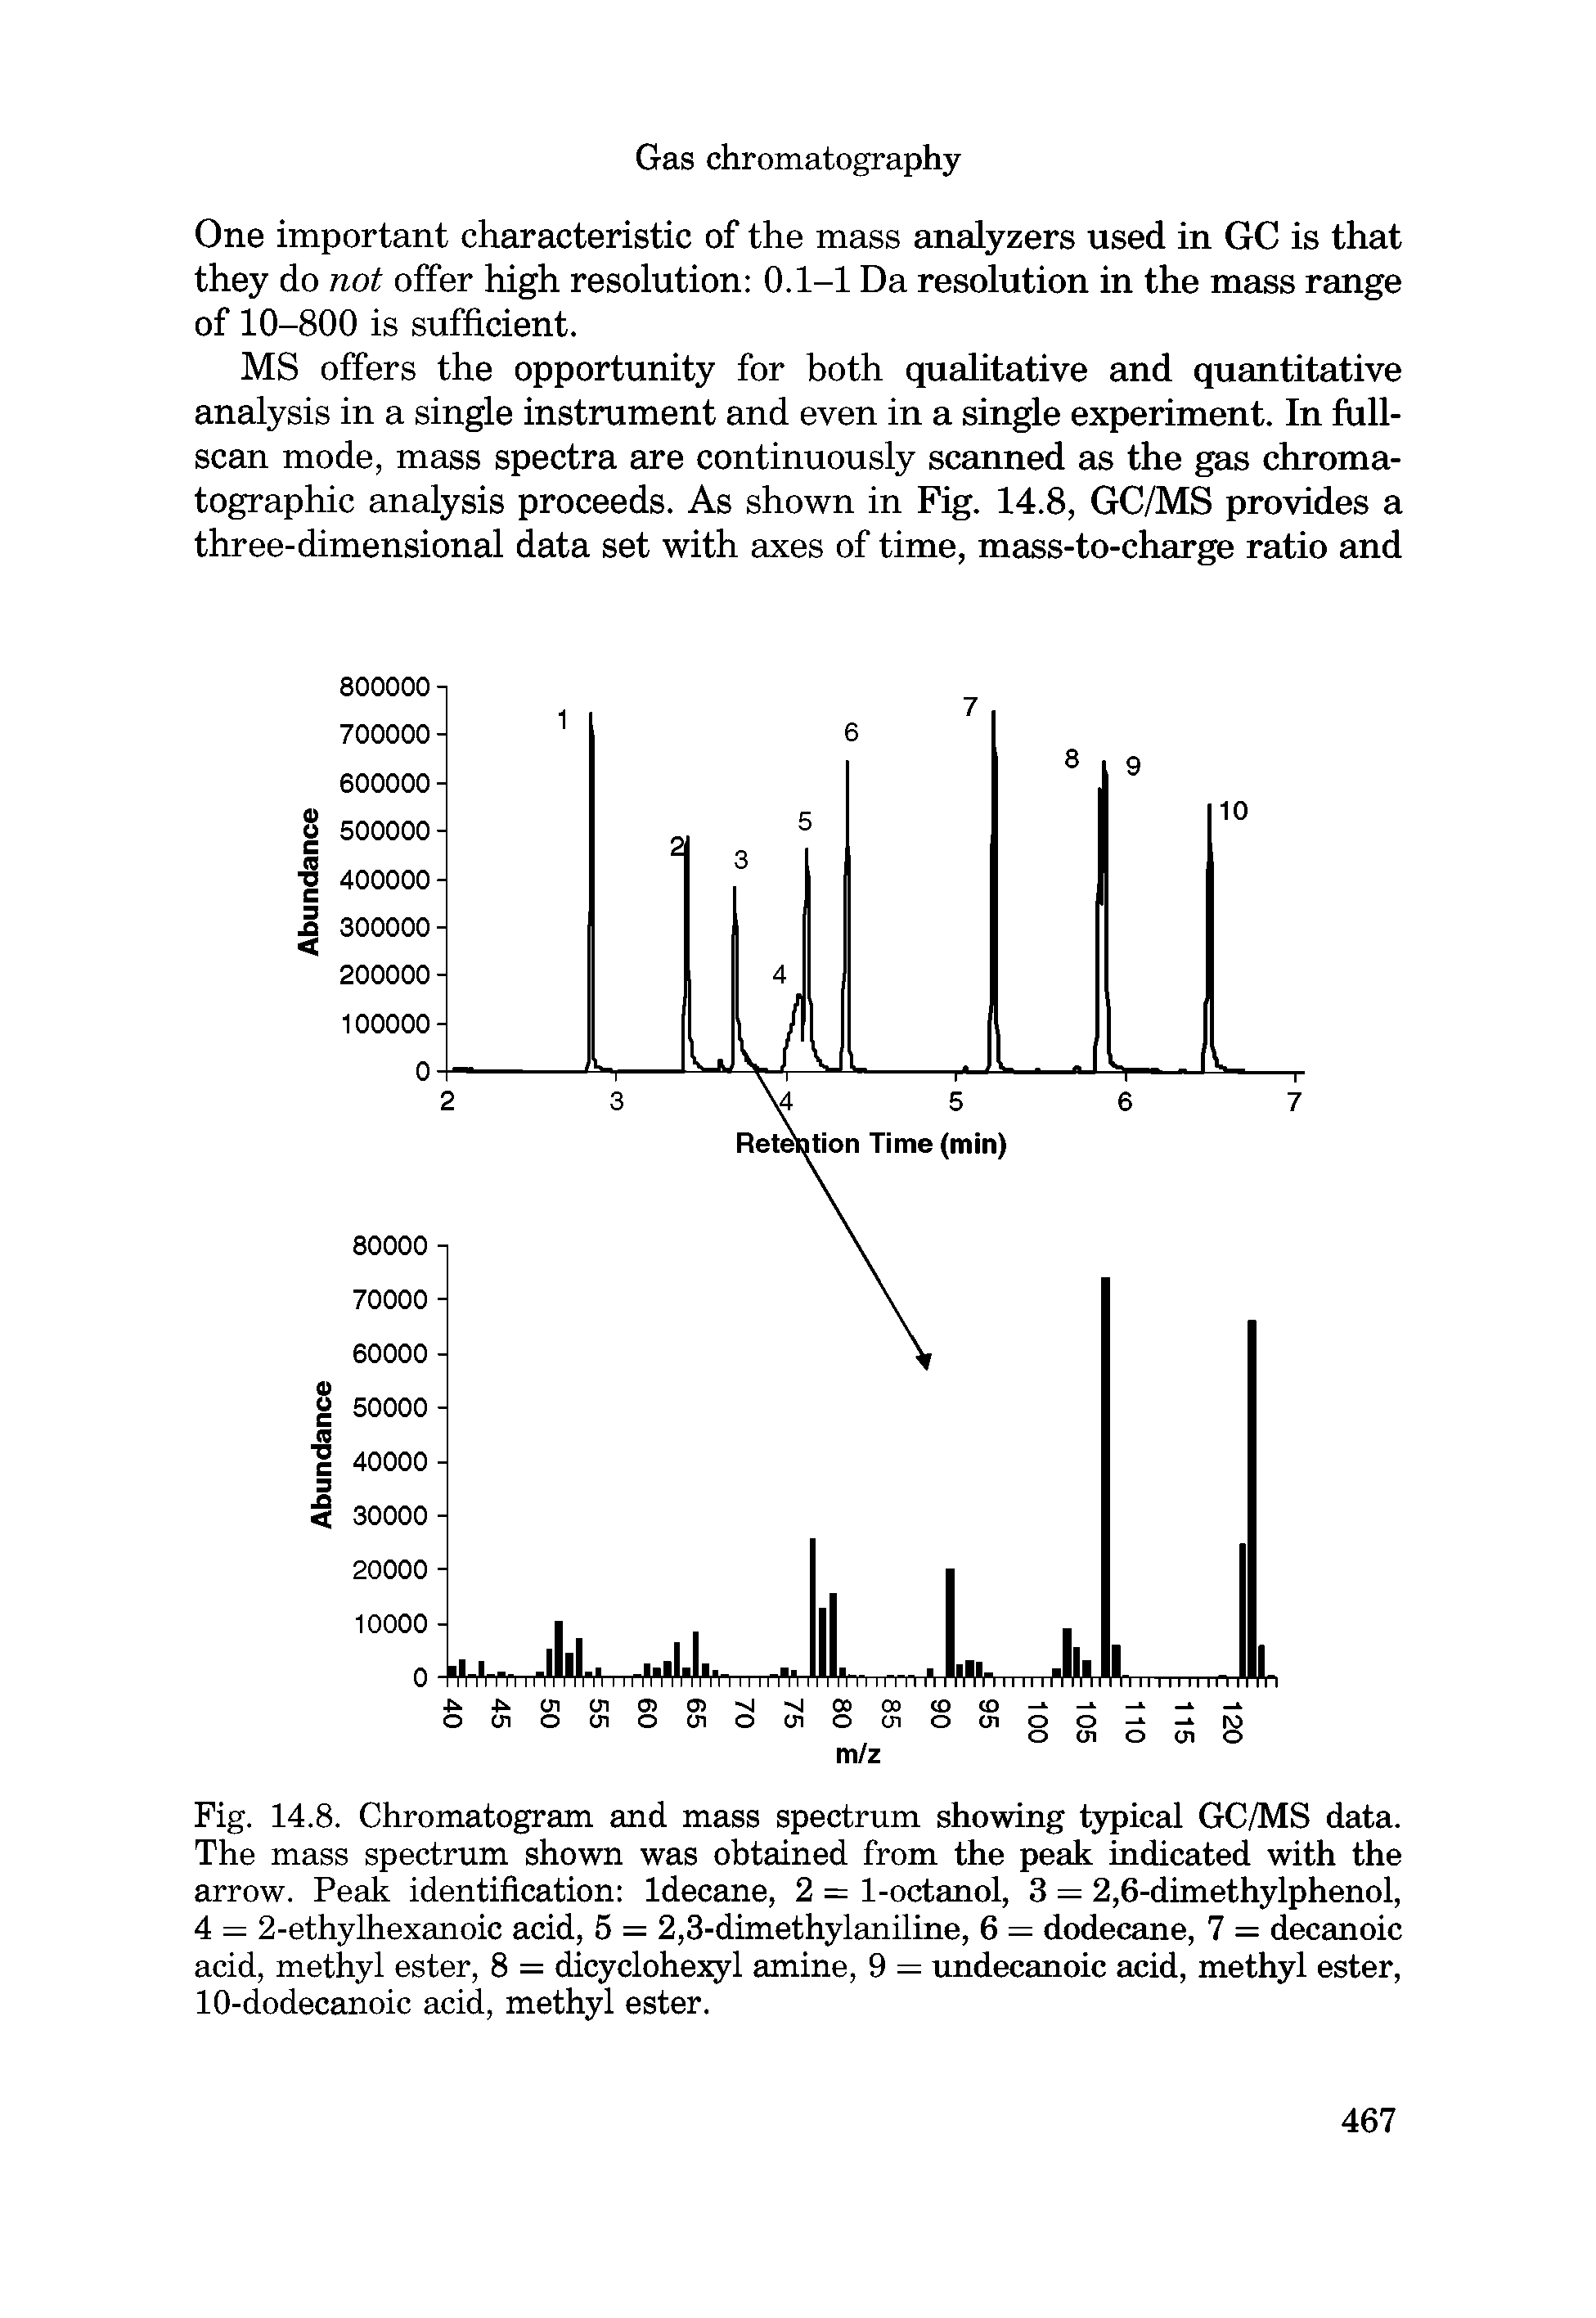 Fig. 14.8. Chromatogram and mass spectrum showing typical GC/MS data. The mass spectrum shown was obtained from the peak indicated with the arrow. Peak identification ldecane, 2 = 1-octanol, 3 = 2,6-dimethylphenol, 4 = 2-ethylhexanoic acid, 5 = 2,3-dimethylaniline, 6 = dodecane, 7 = decanoic acid, methyl ester, 8 = dicyclohexyl amine, 9 = undecanoic acid, methyl ester, 10-dodecanoic acid, methyl ester.